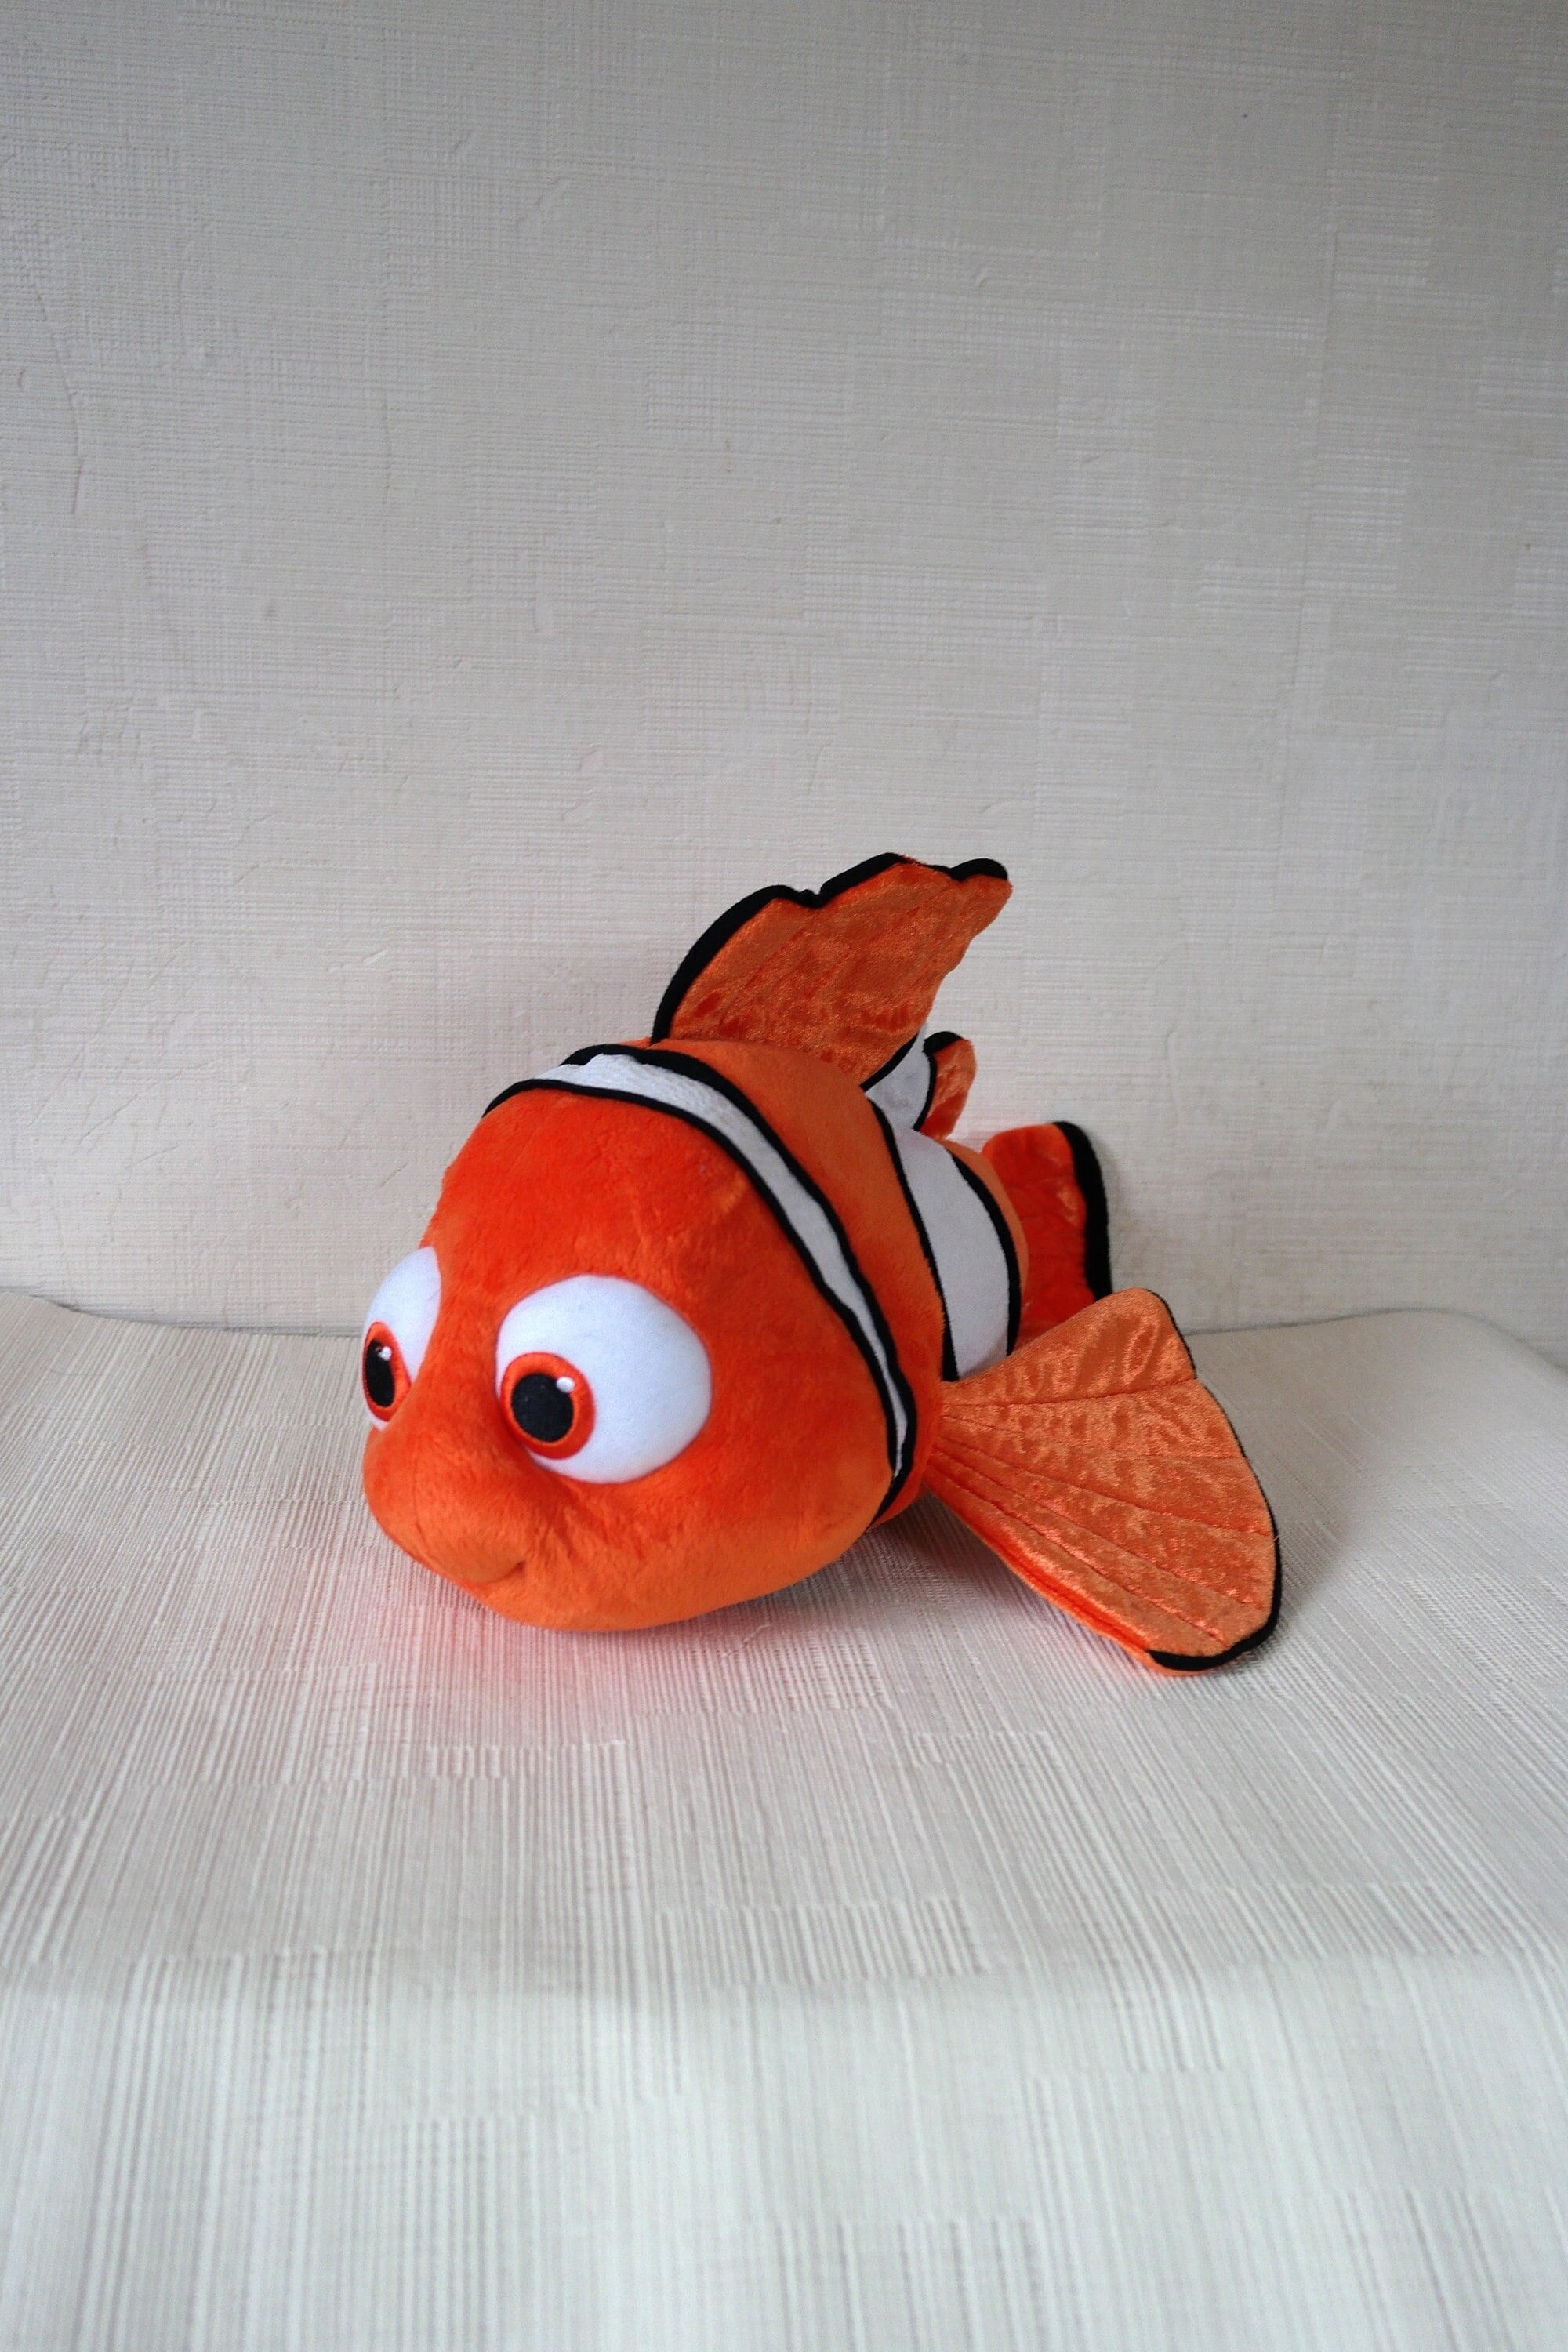 FISH CROCHET PATTERN, Amigurumi Cuddle Fish with big eyes